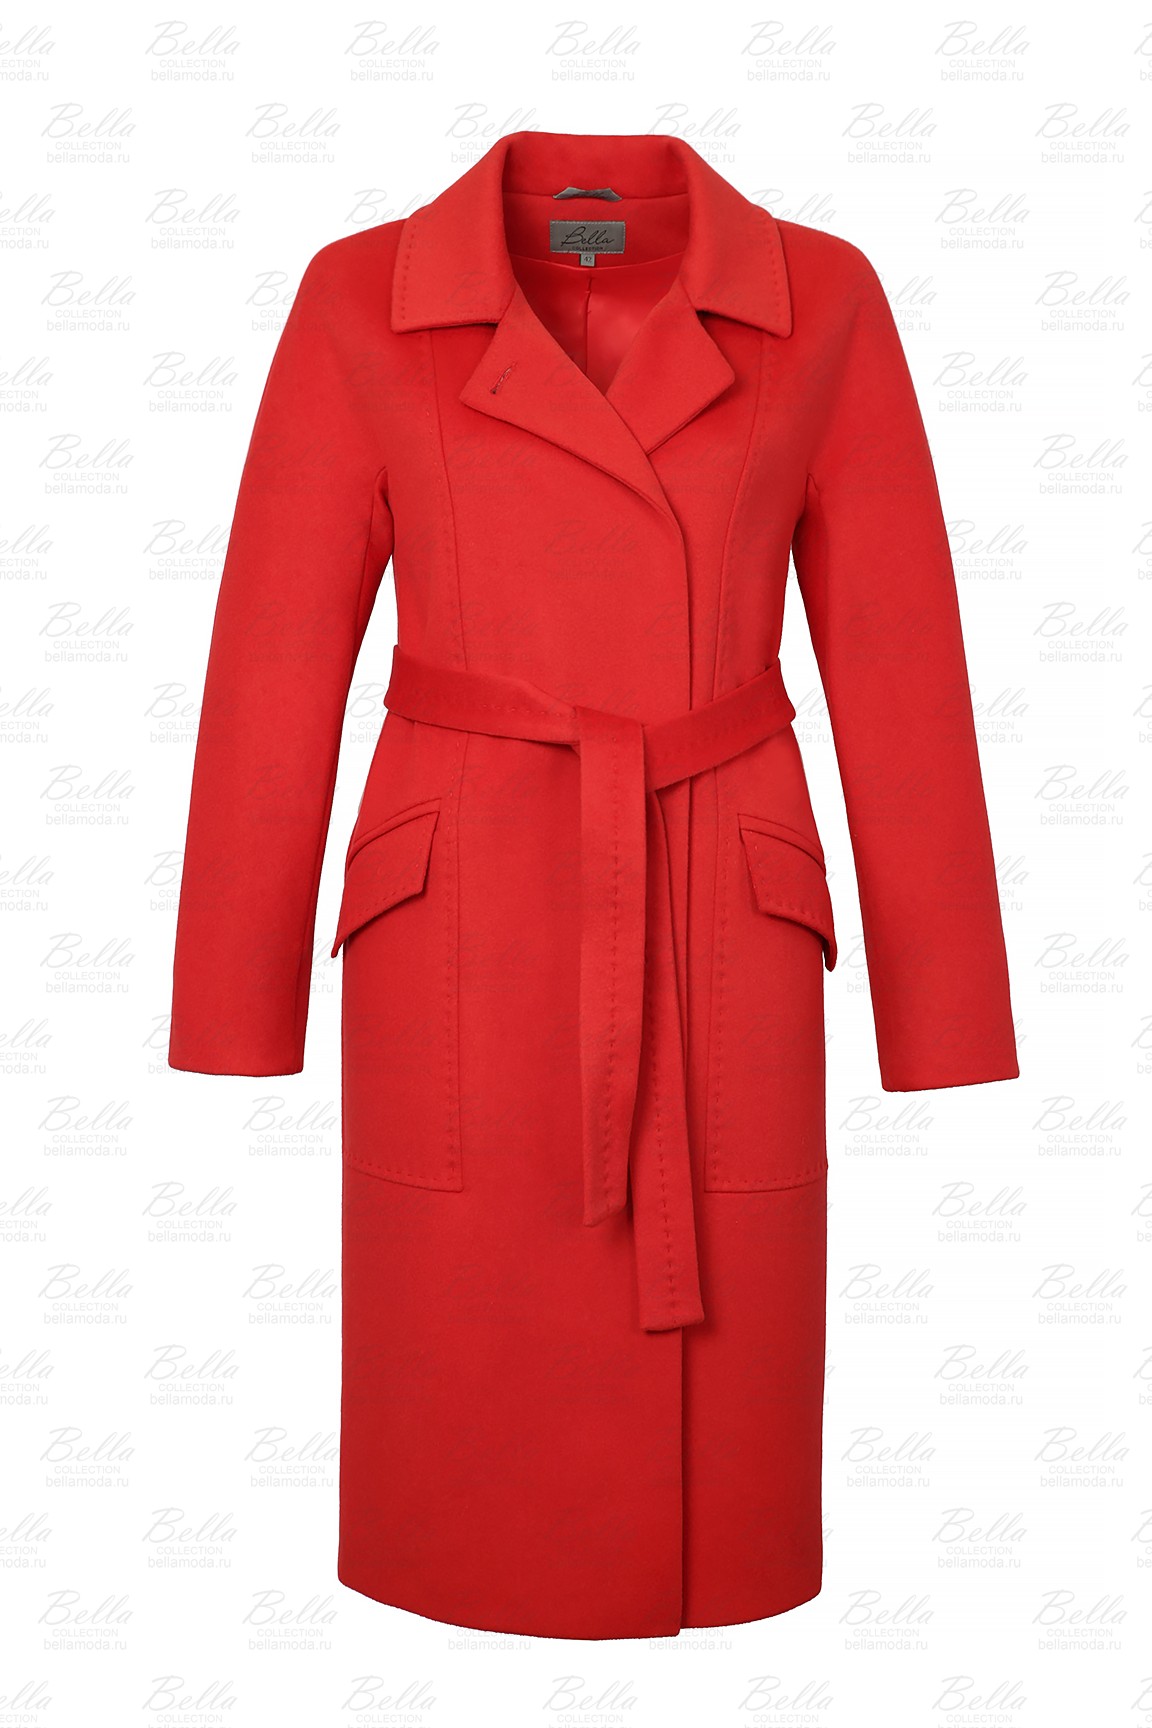 Bella collection красное пальто. Bella collection пальто